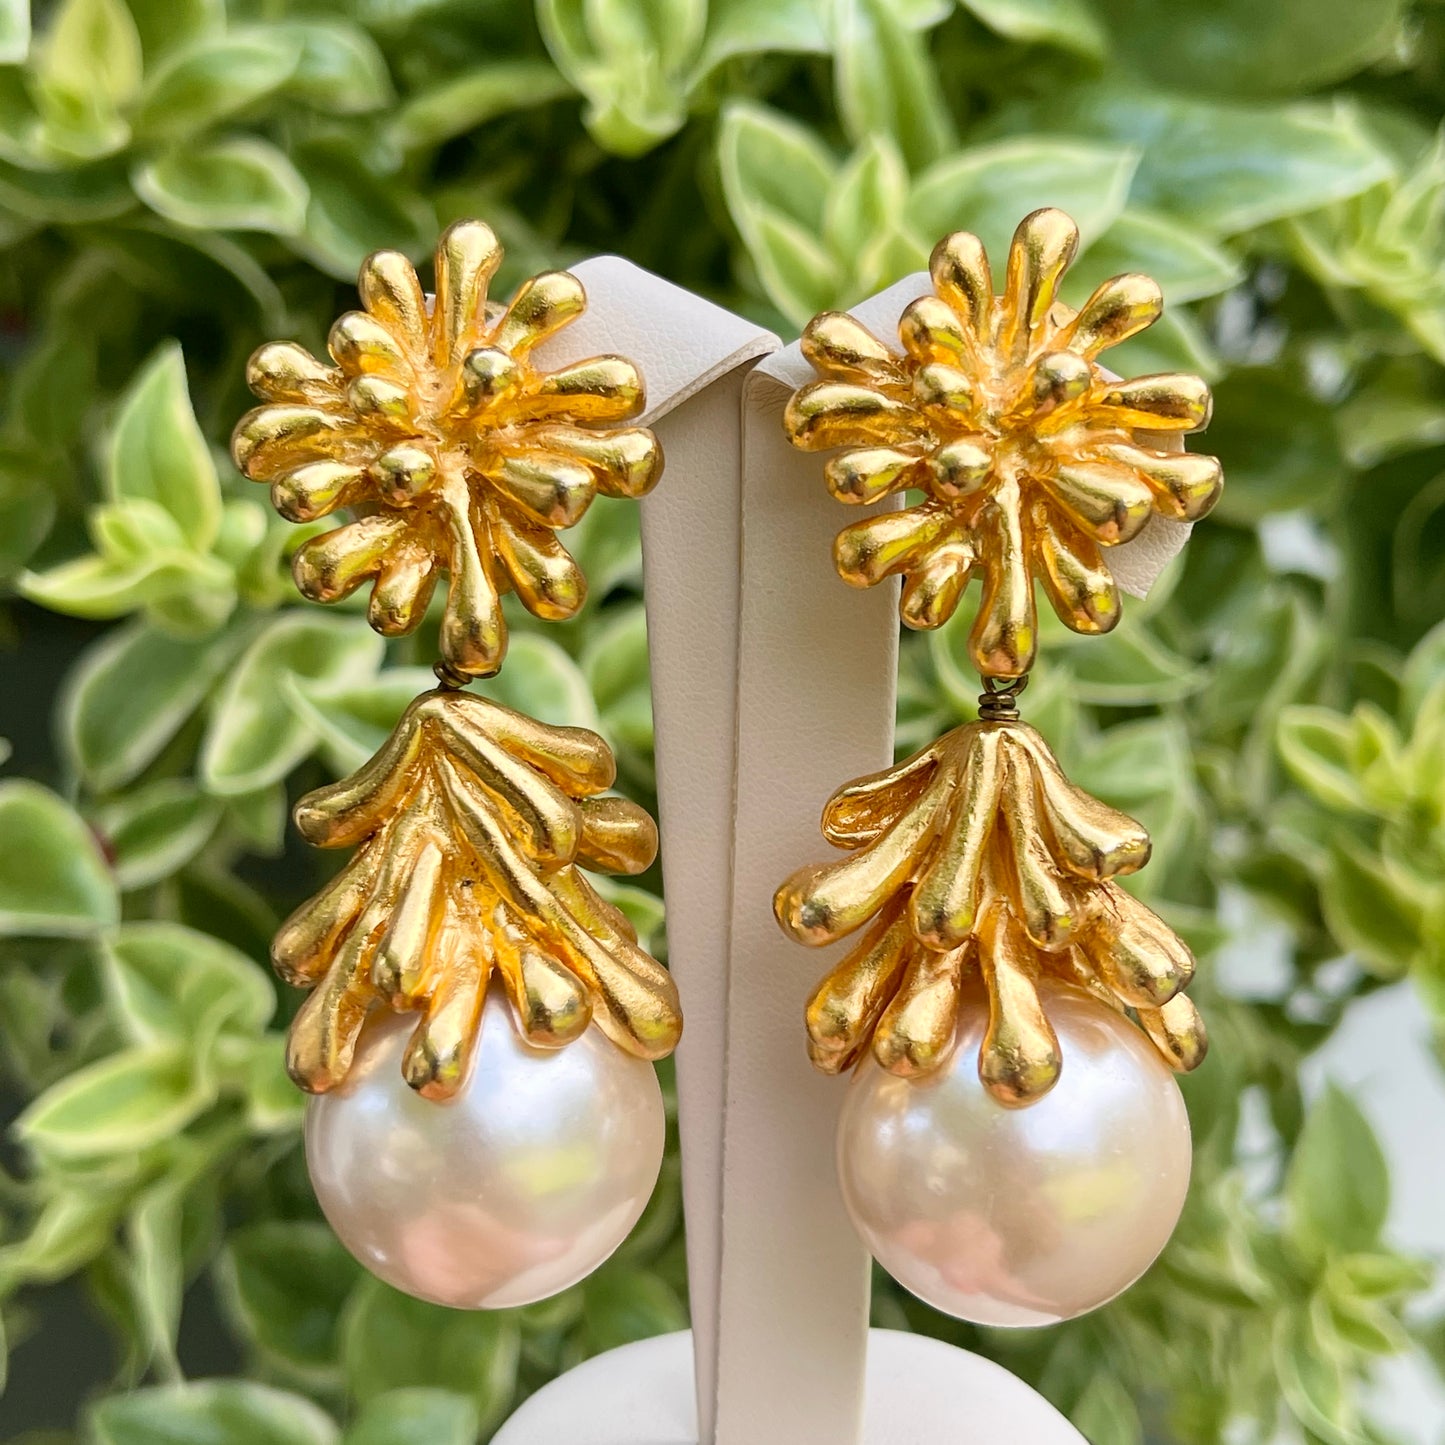 Vintage Christian Lacroix Gold-Tone Sea Anemone Large Pearl Drop Earrings